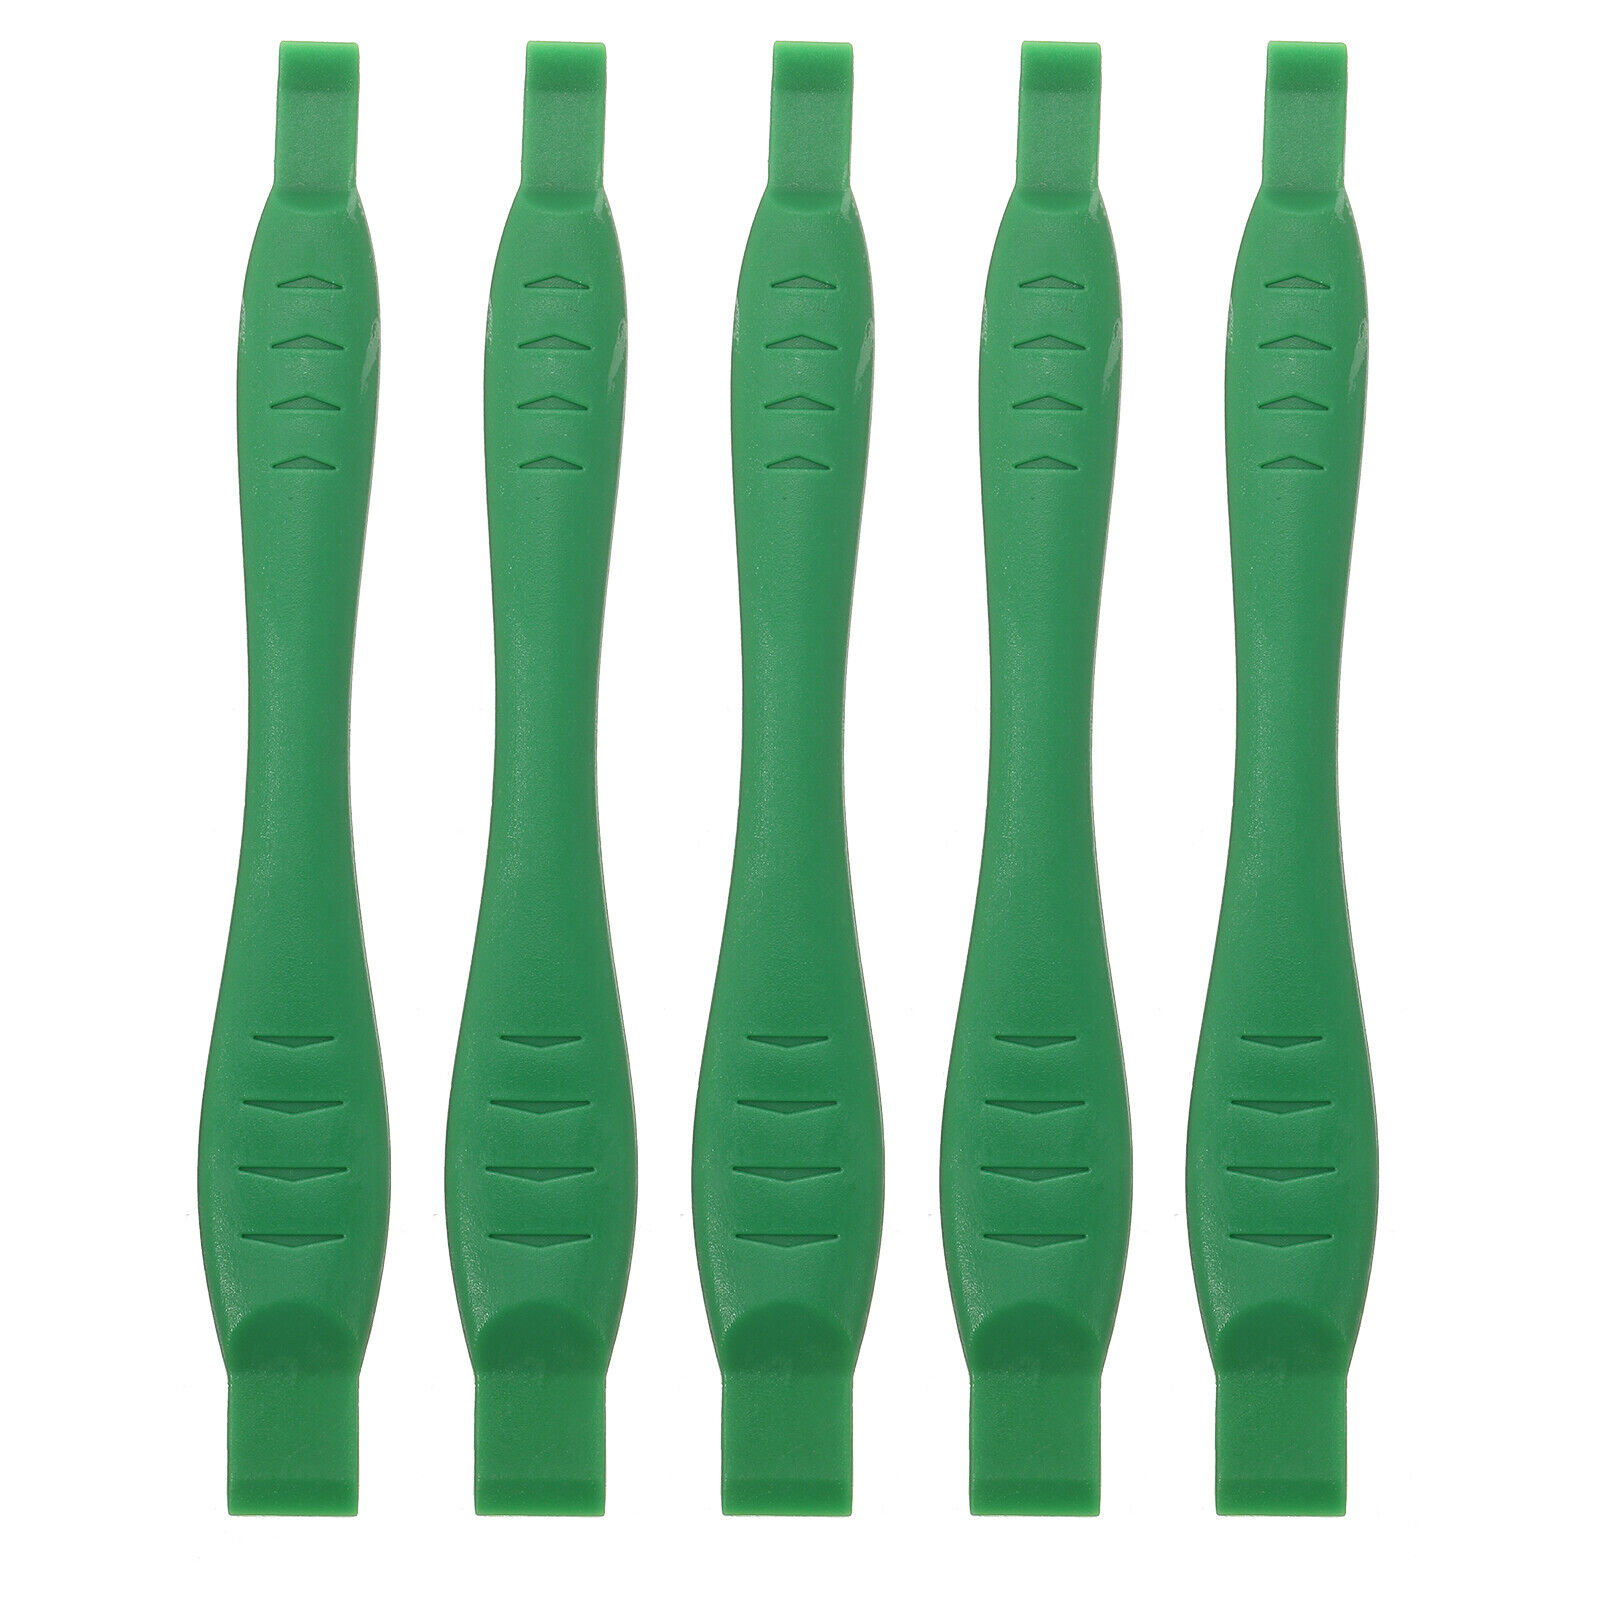 5pcs Universal Plastic Stick Spudger Crowbar Pry Opening Tools Repair, Green